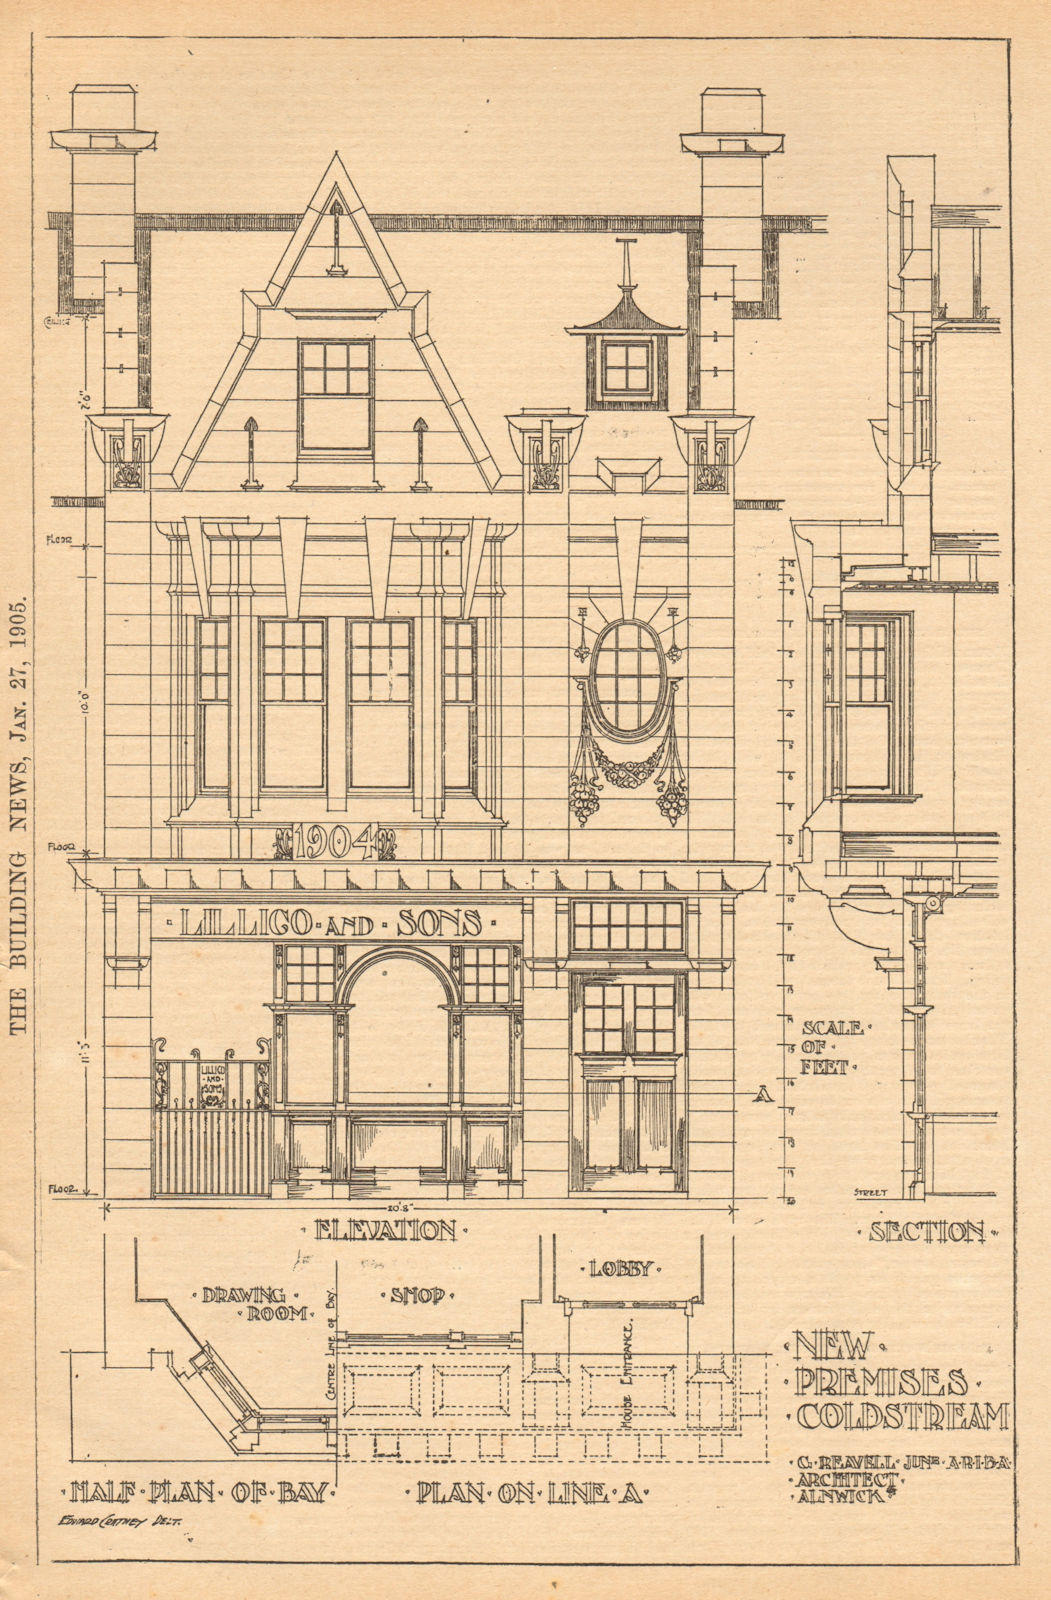 Associate Product New premises, Coldstream, G Reavell, Architect. Lilligo & Sons. Scotland 1905